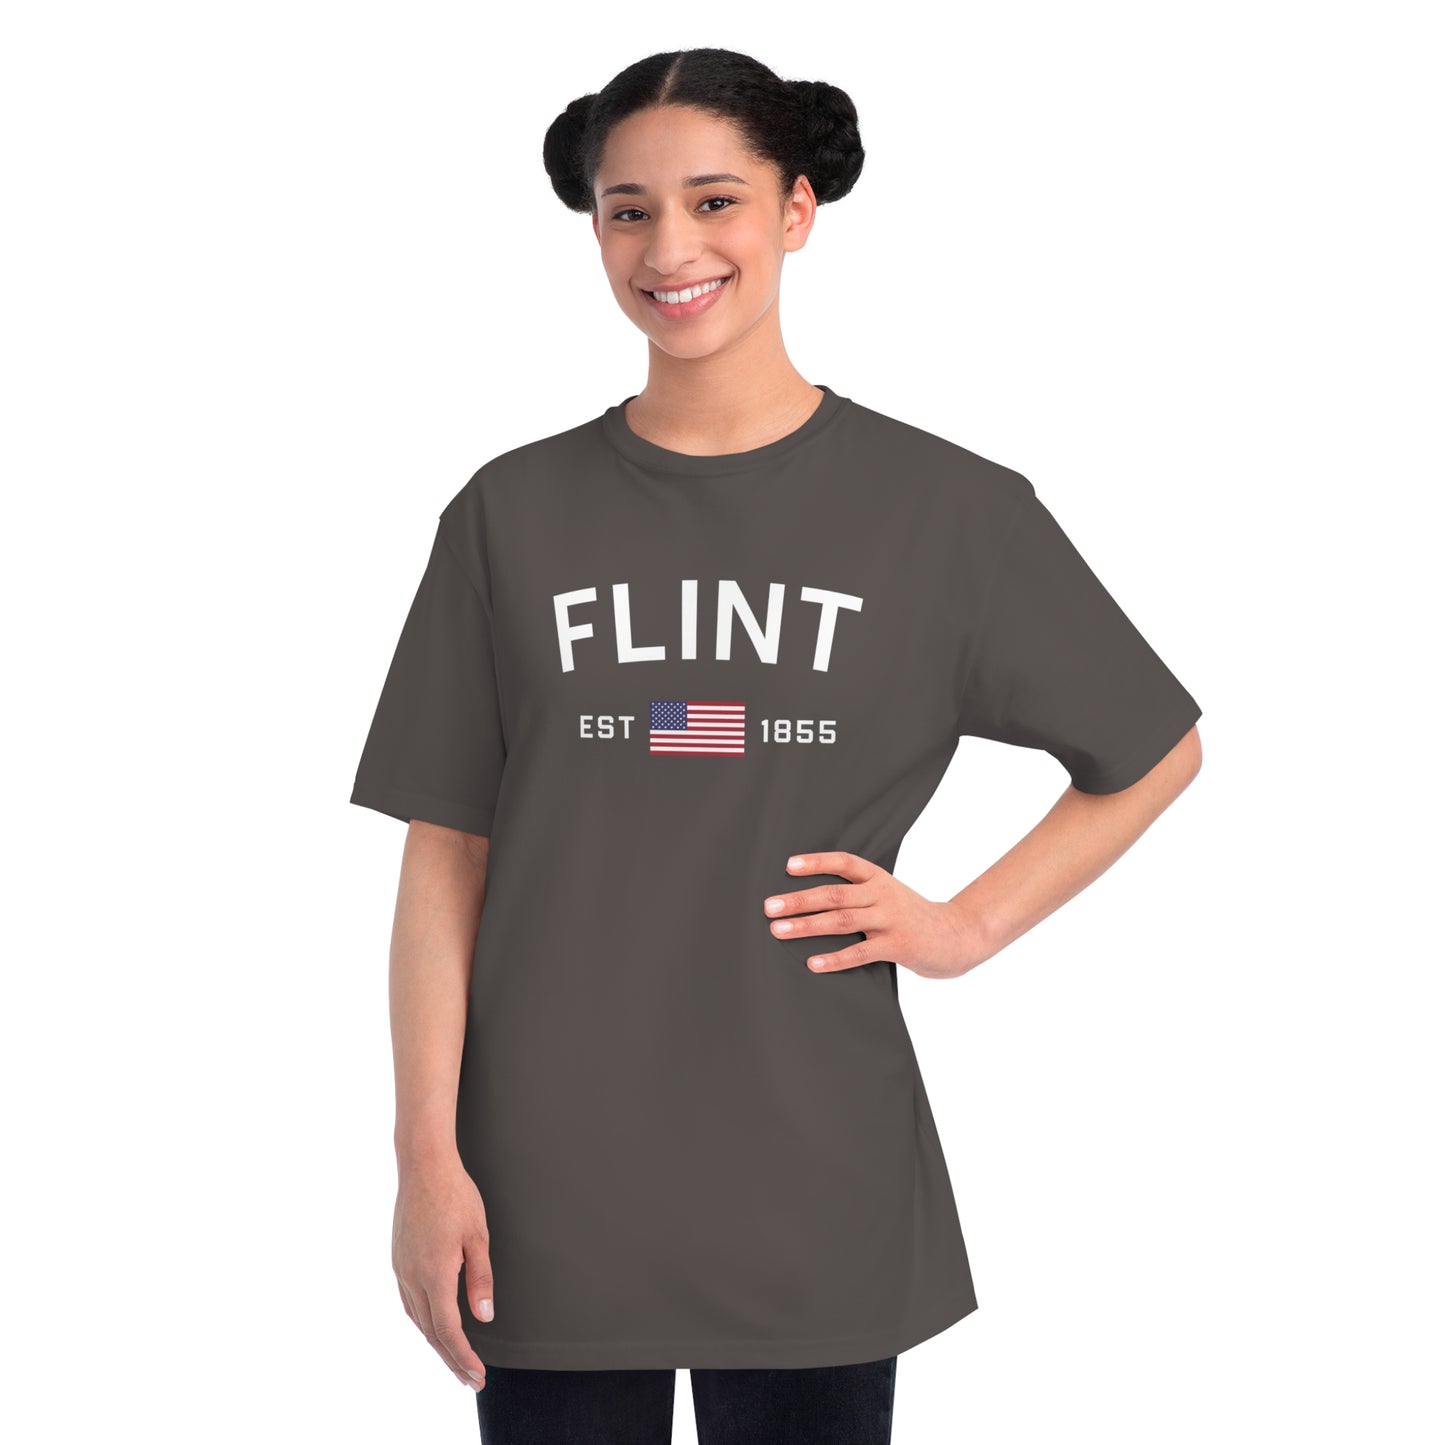 'Flint EST 1855' T-Shirt (w/USA Flag) | Unisex Organic